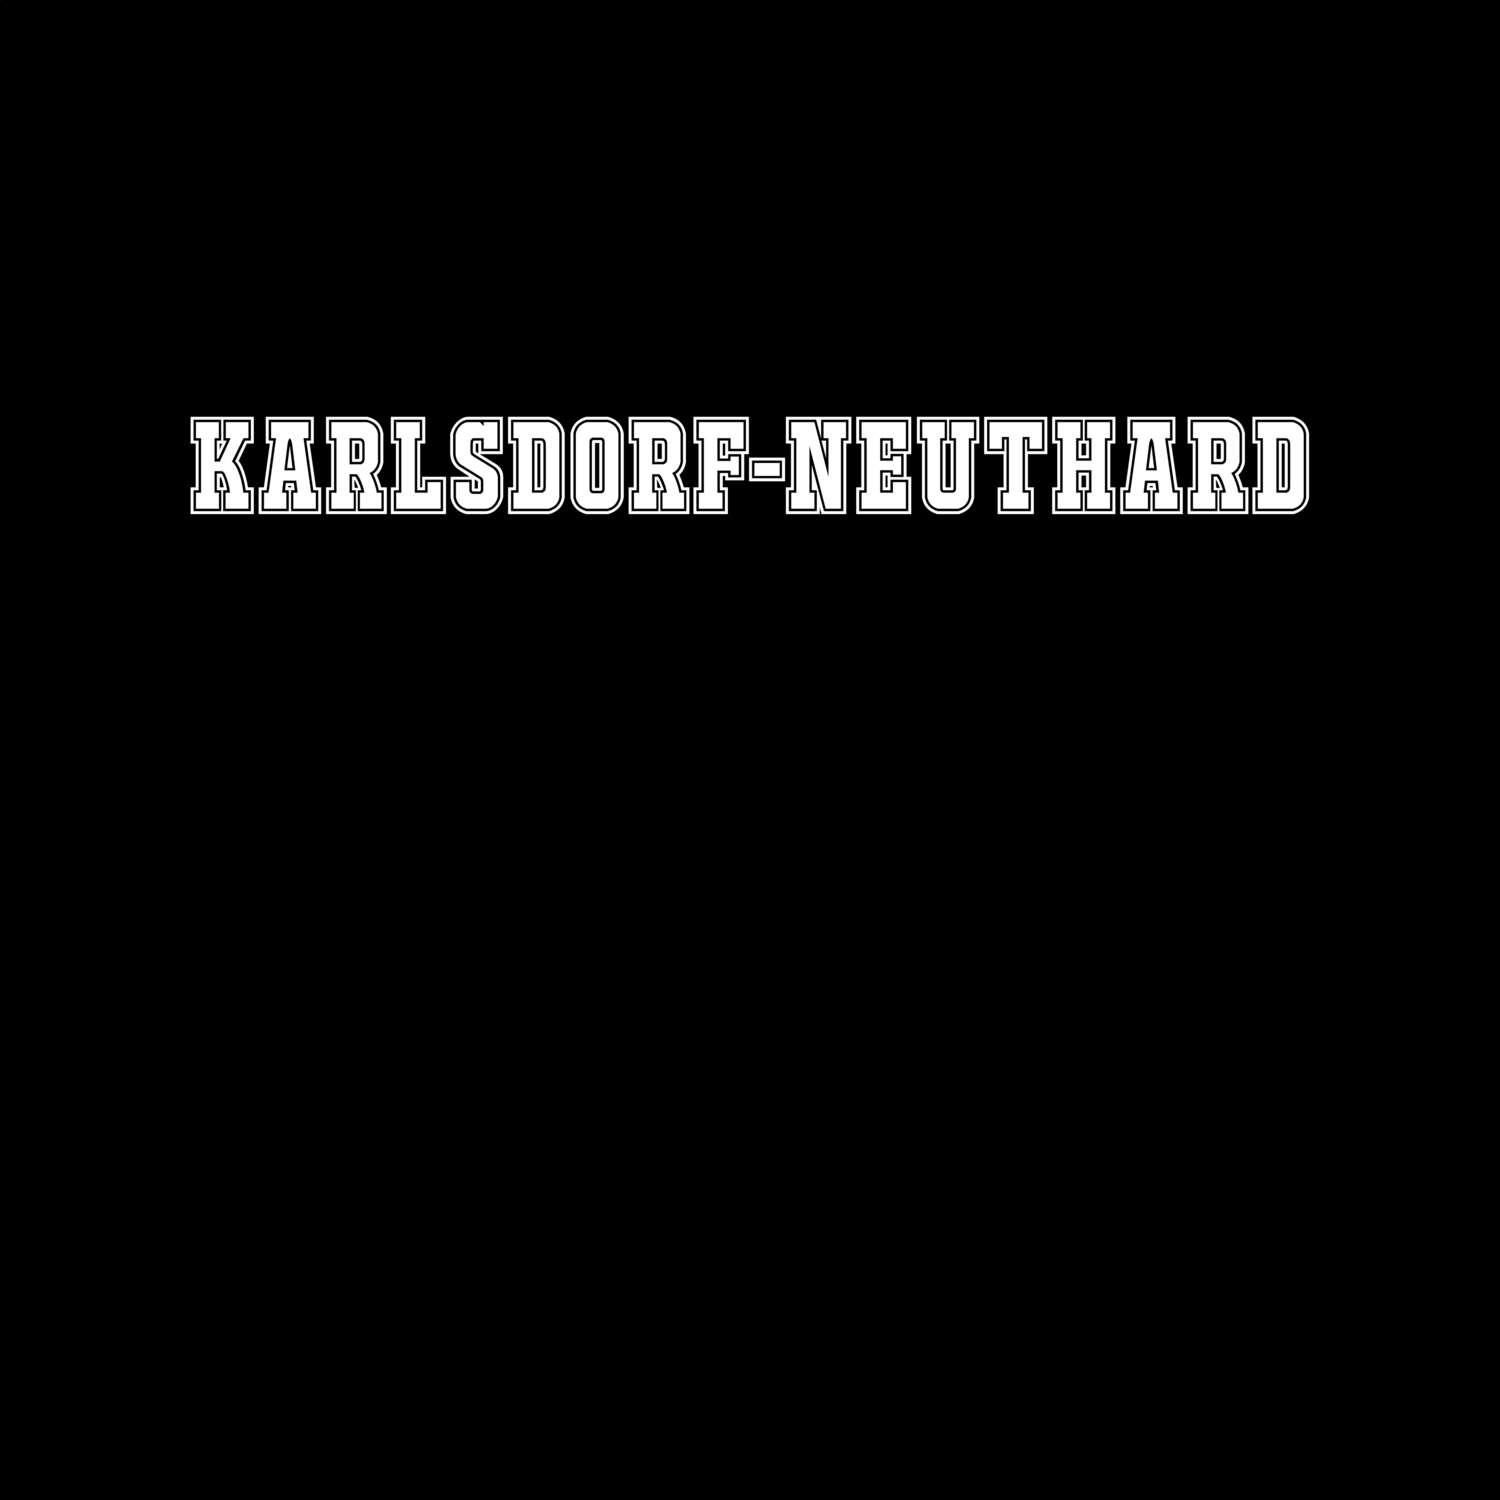 Karlsdorf-Neuthard T-Shirt »Classic«